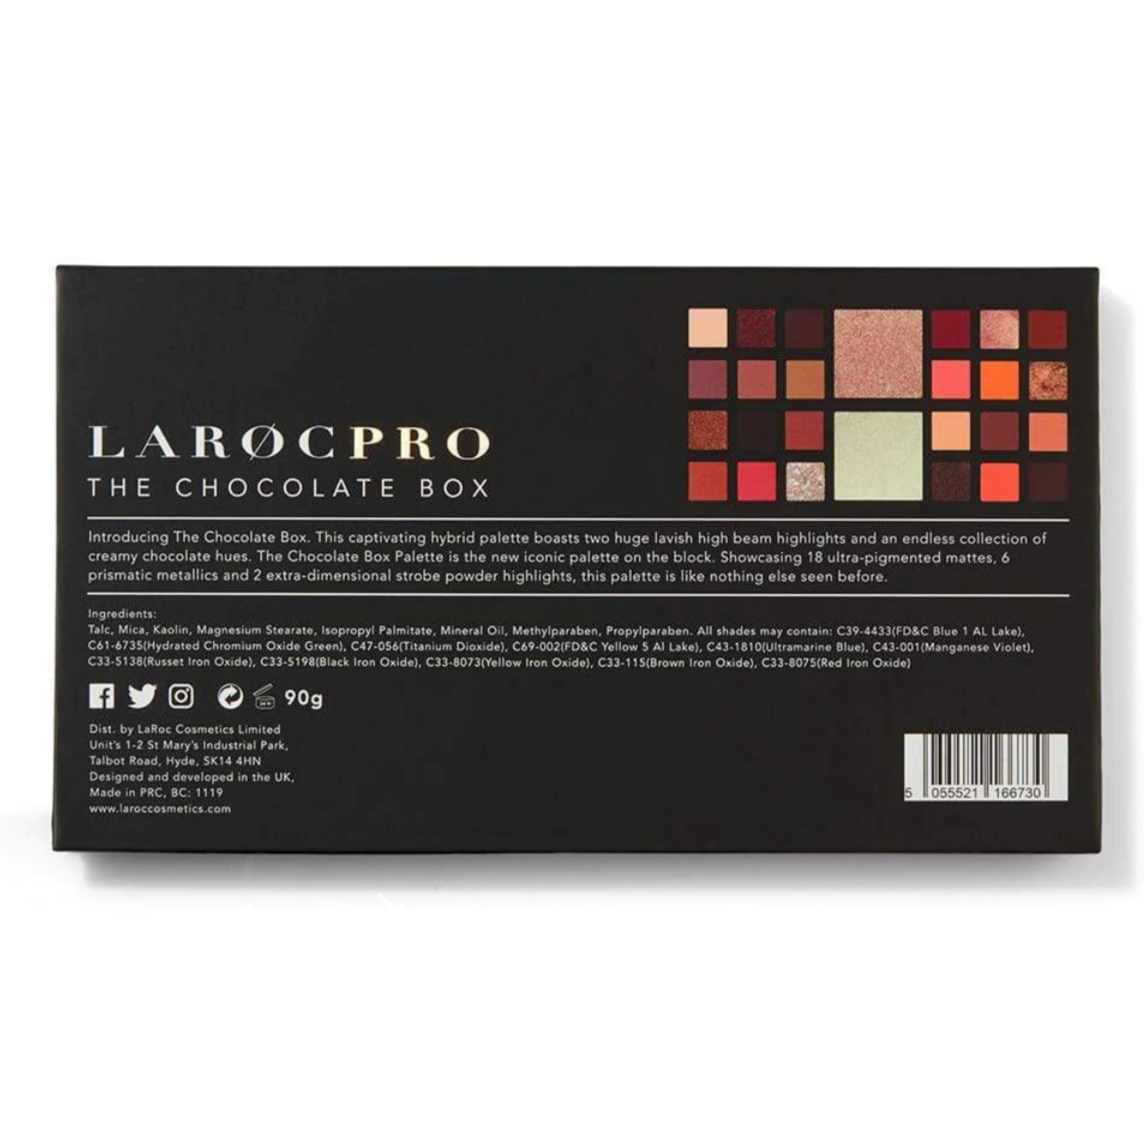 LaRoc PRO The Chocolate Box, back of palette